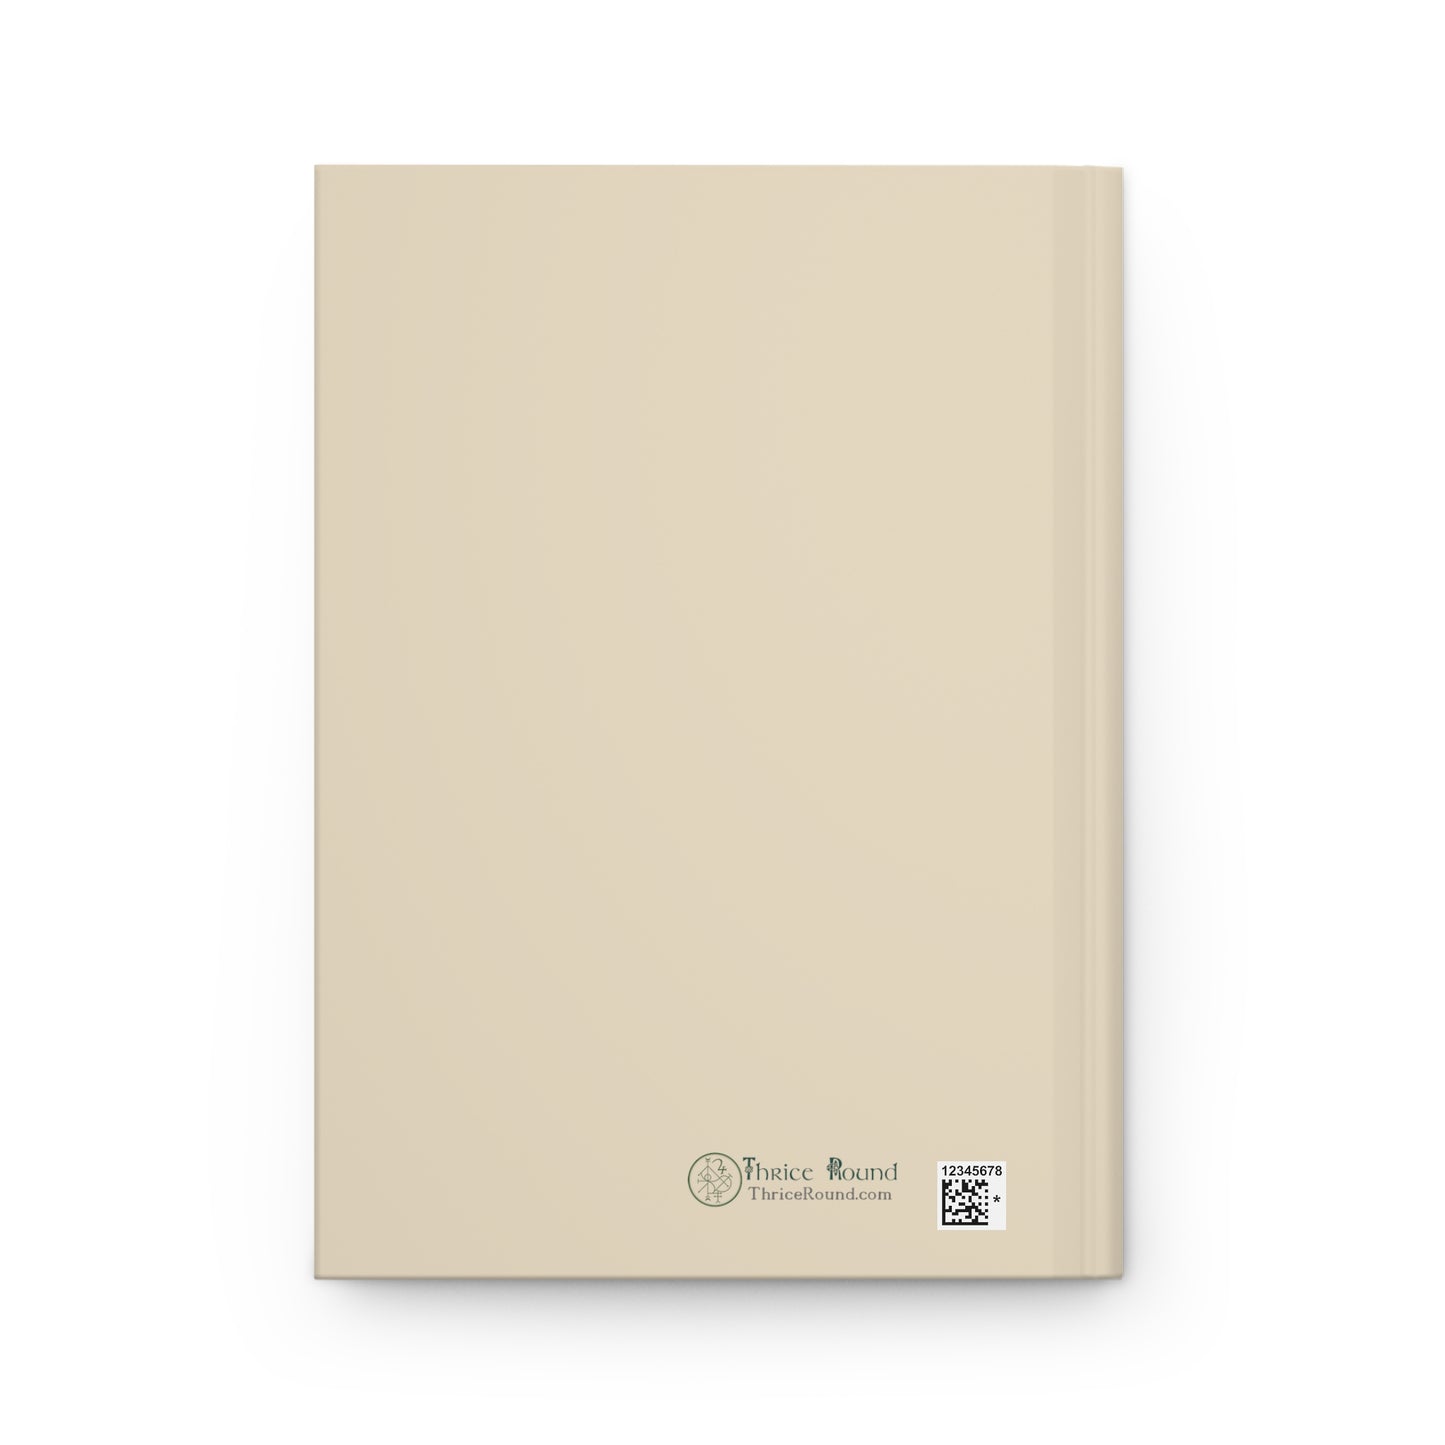 The Moon Tarot Hardcover Notebook - Tarot journal